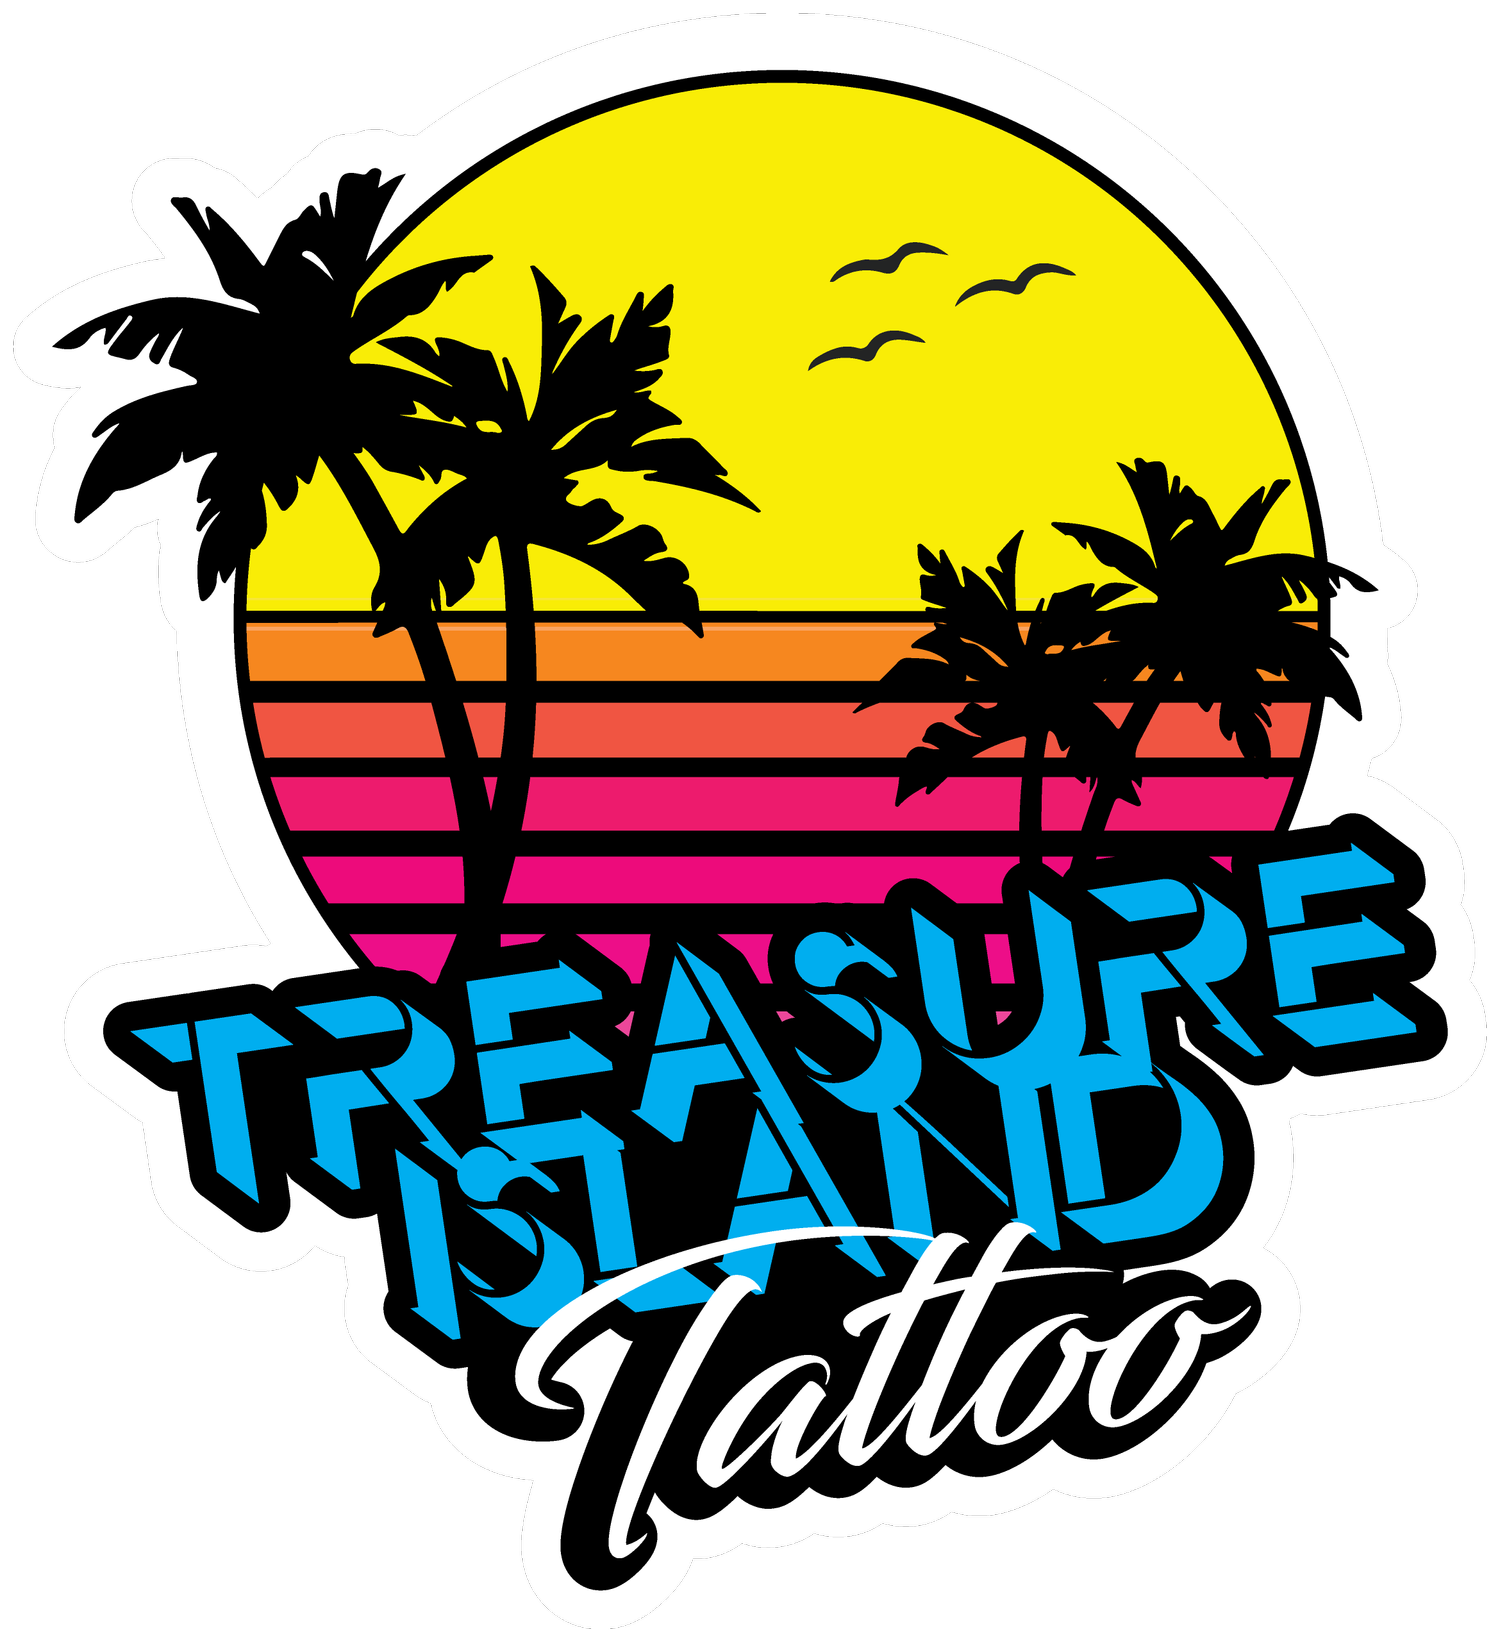 Treasure Island Tattoo